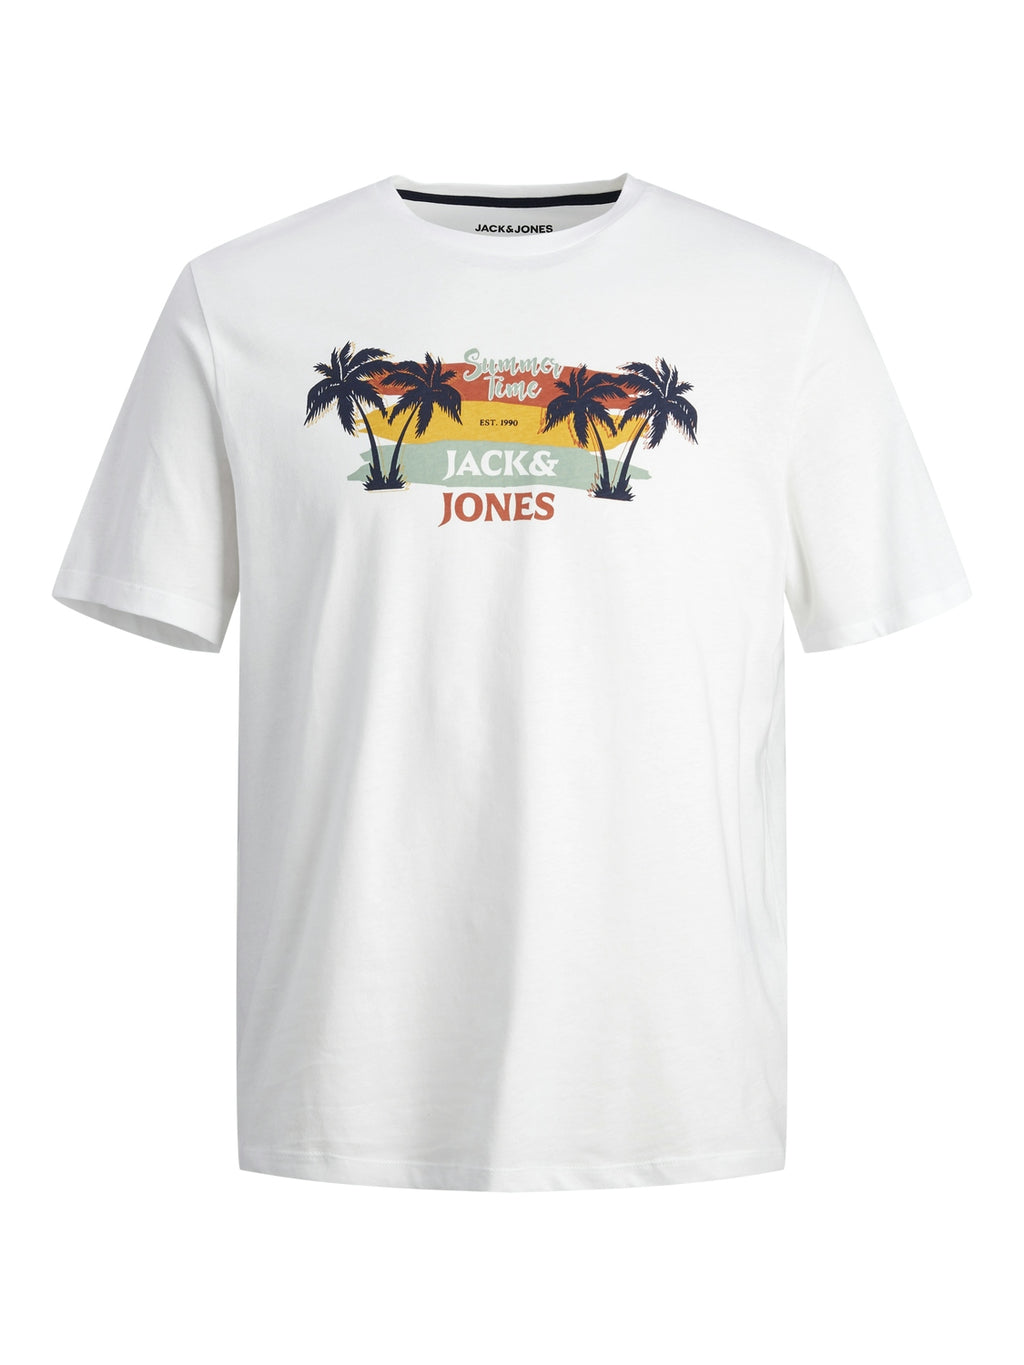 Jack & Jones Summer Vibe Tee White - Raw Menswear